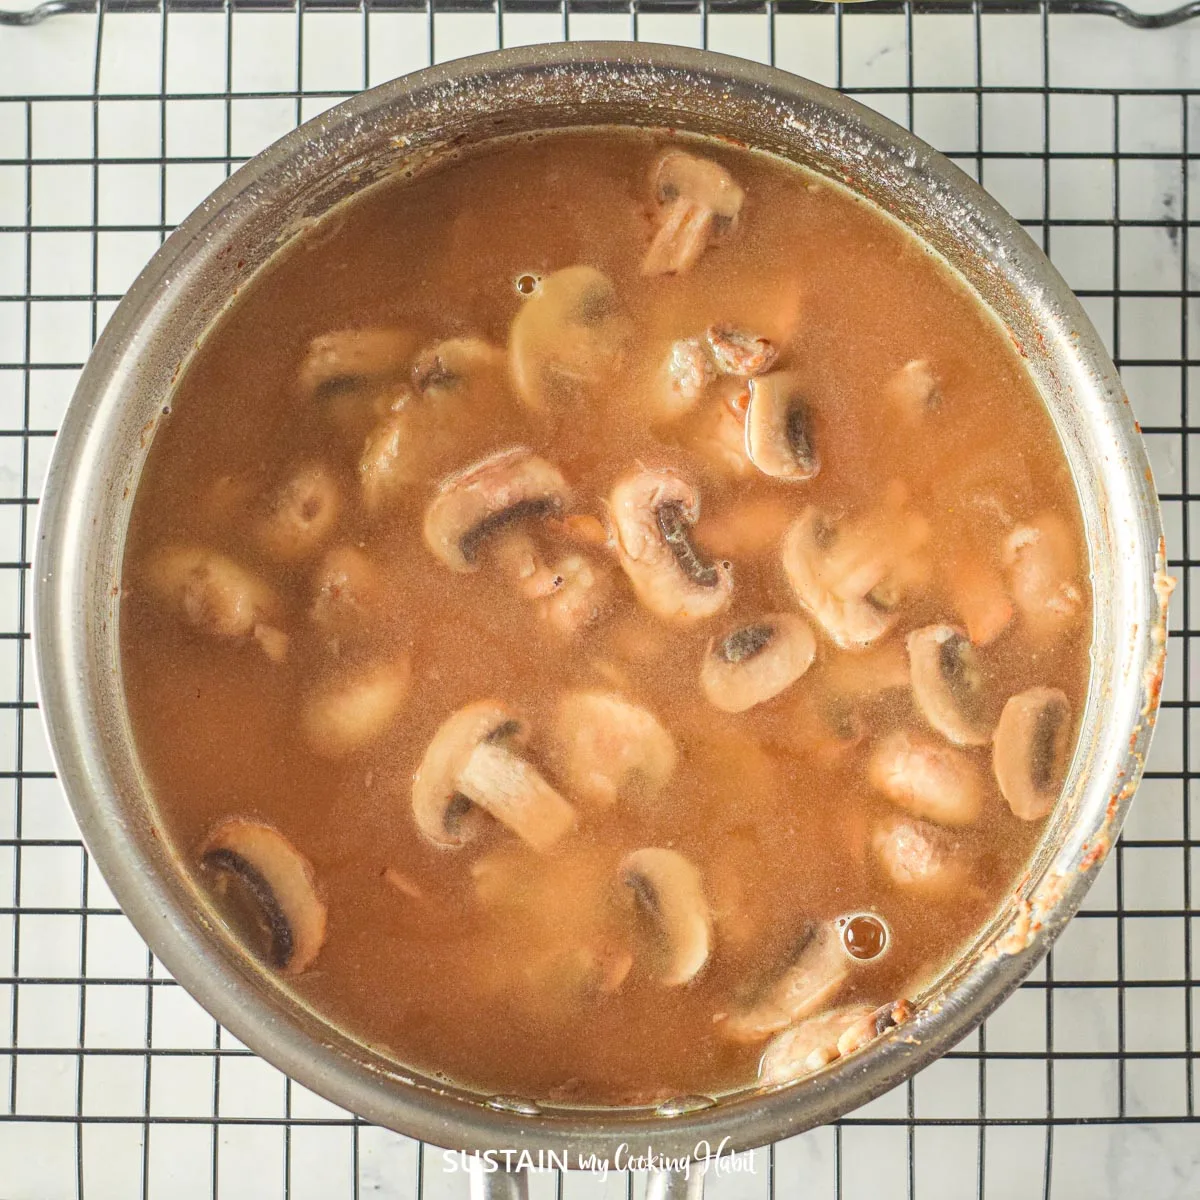 Adding broth to the mushrooms.